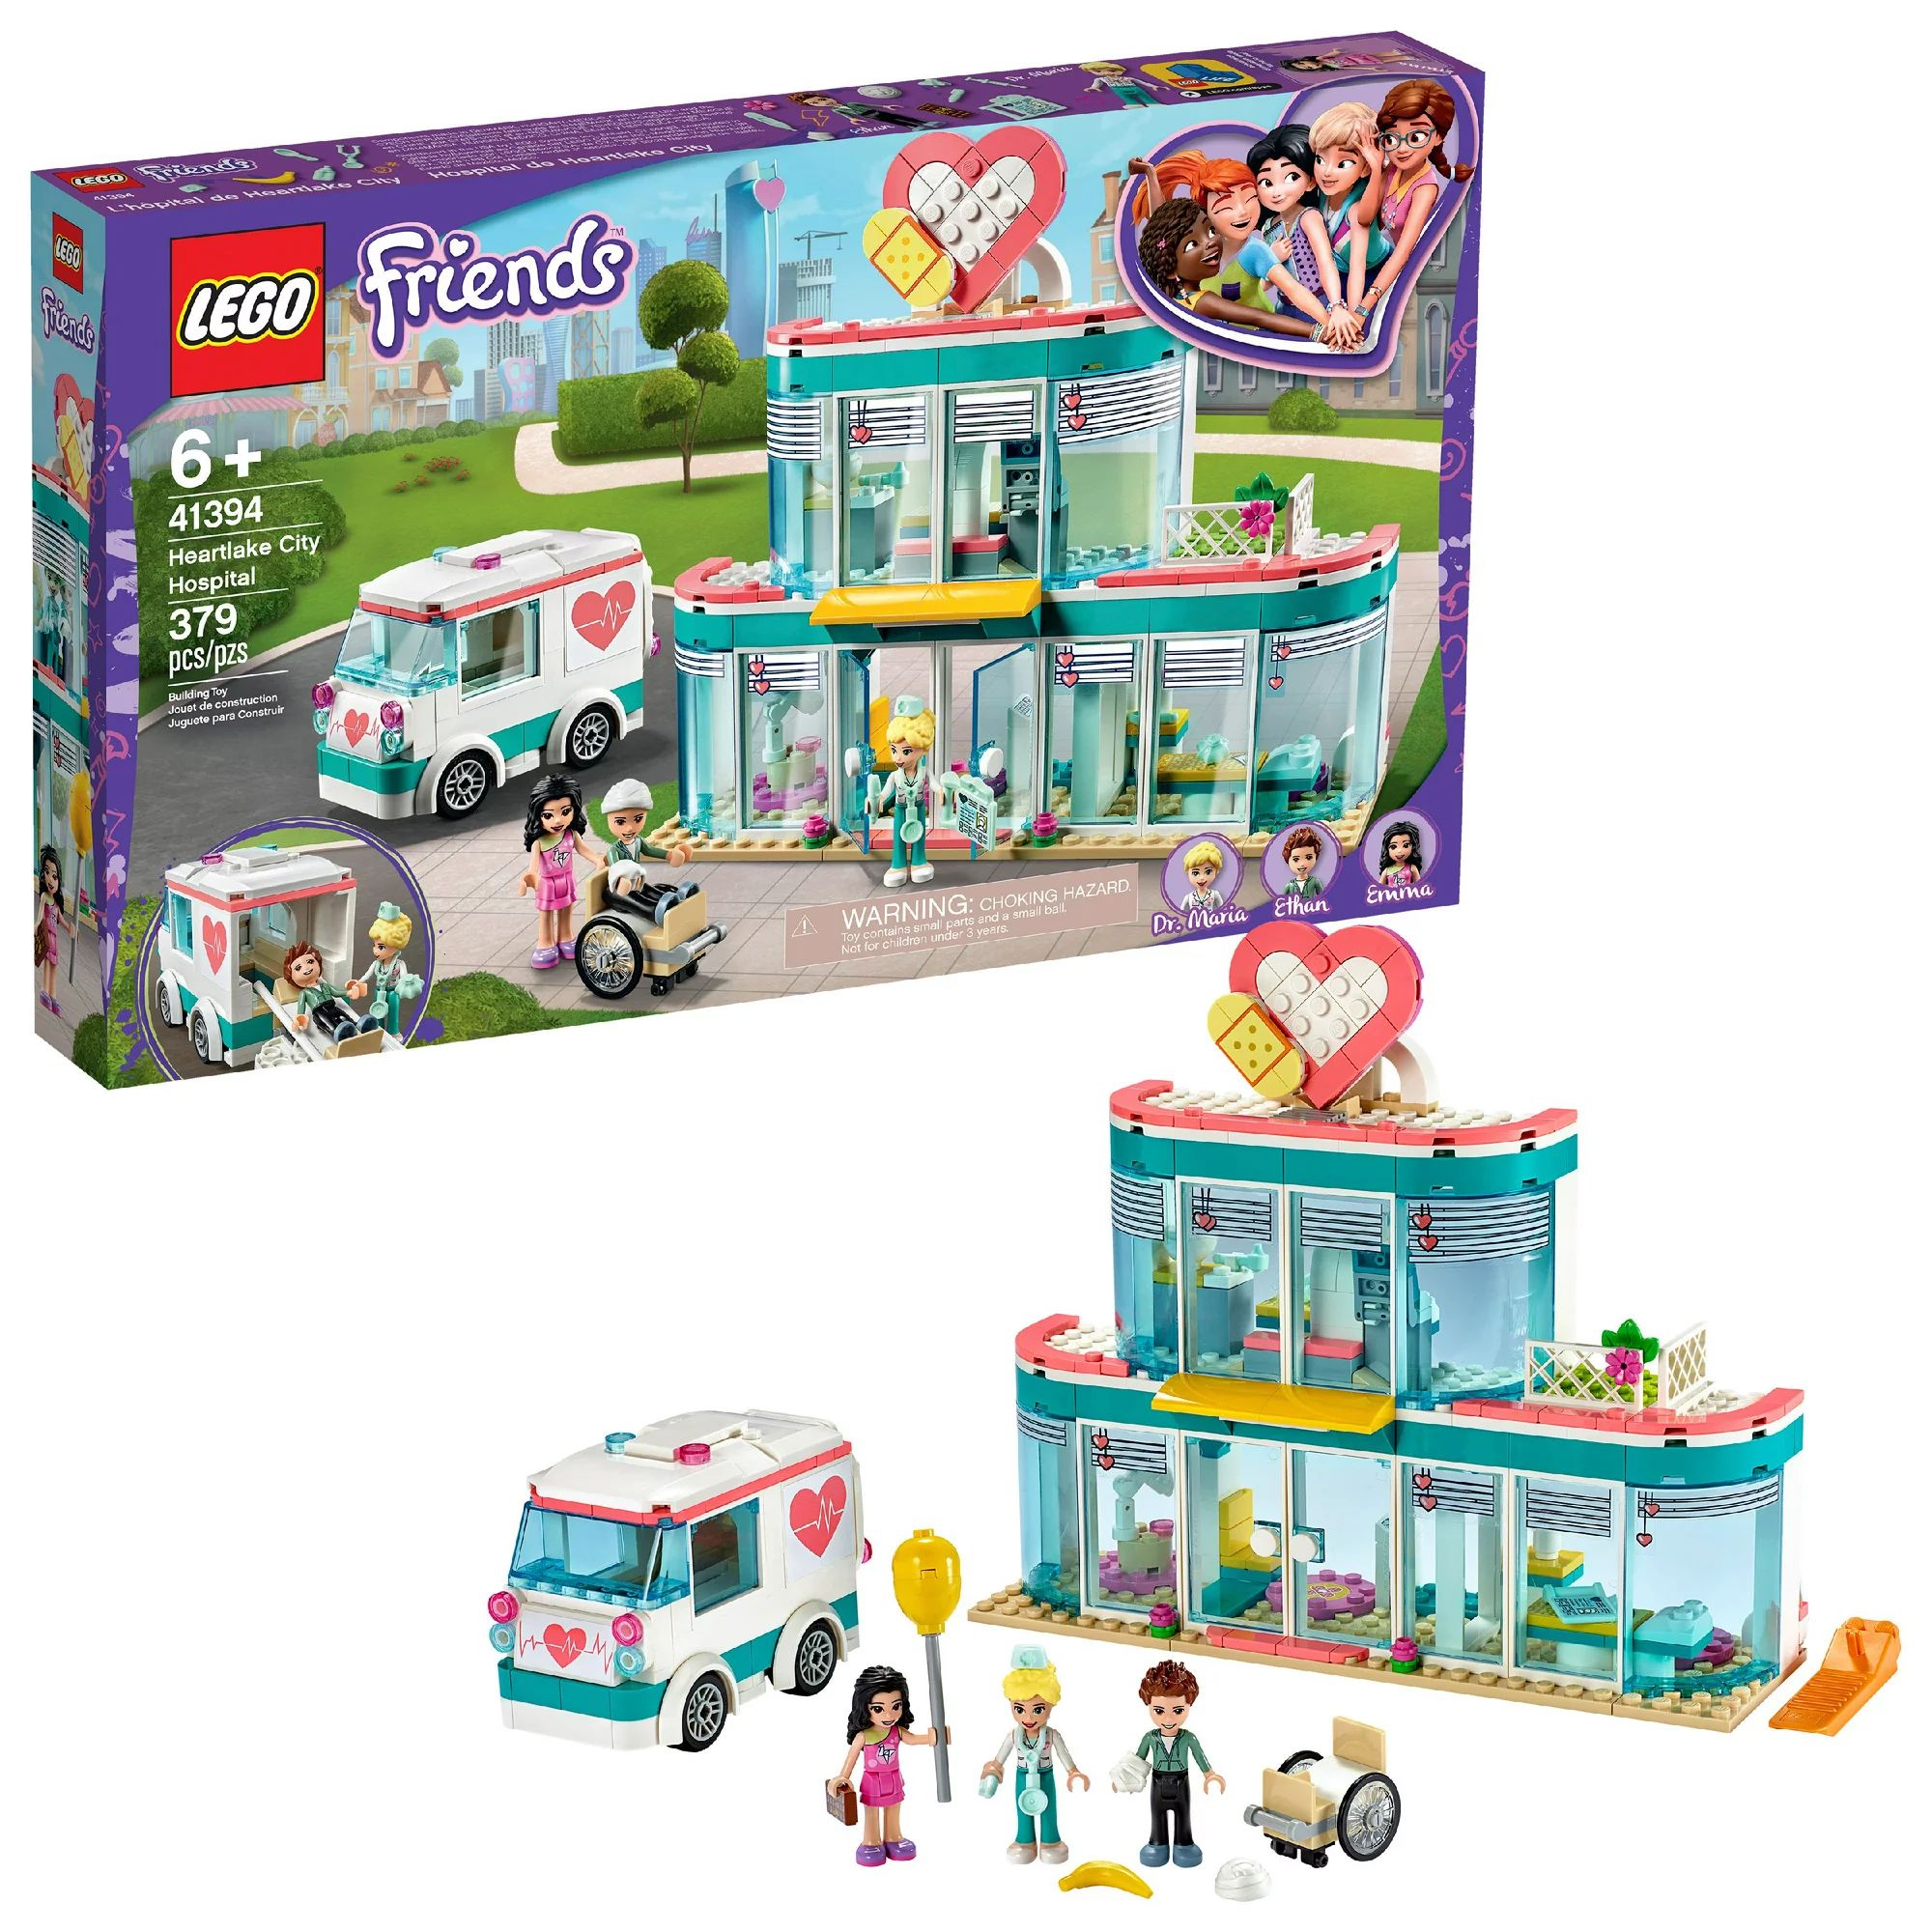 LEGO Friends Heartlake City Hospital 41394 Doctor Toy Building Kit (379 Pieces) | Walmart (US)